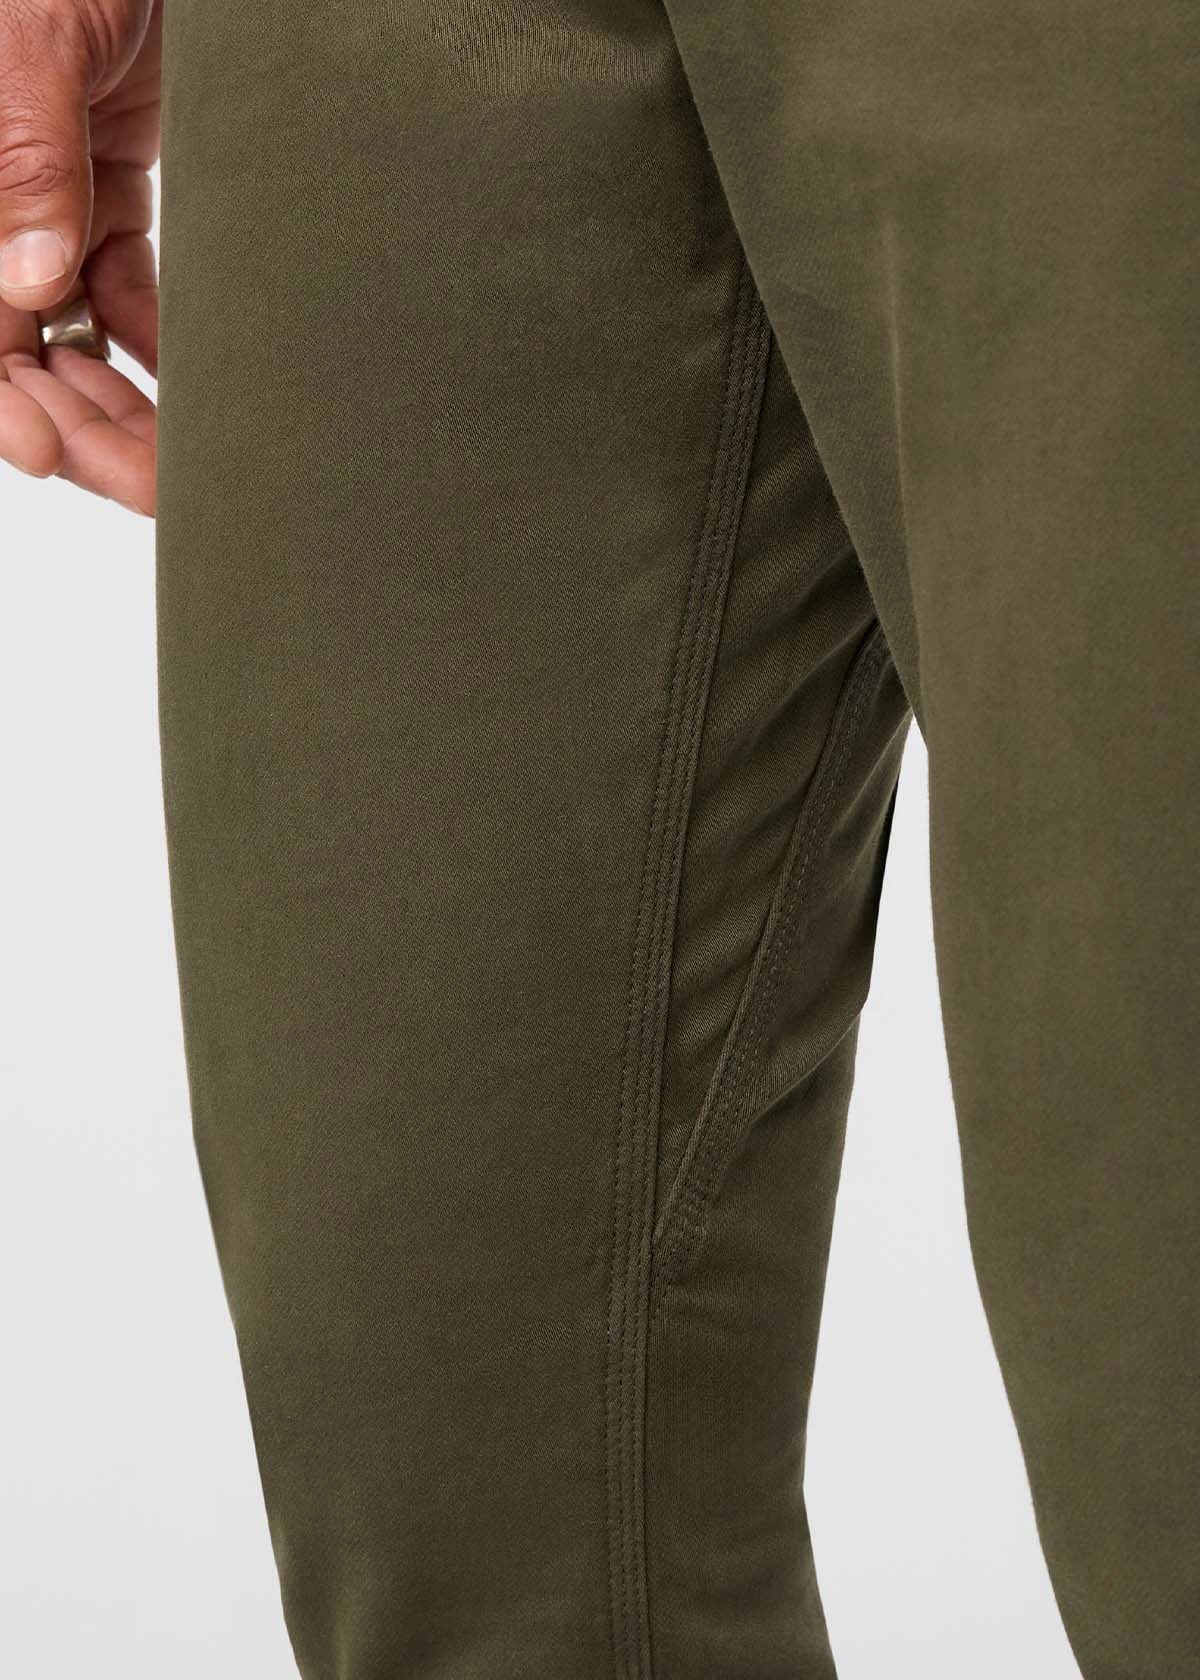 Nike Dri Fit Front Zipper Flare Pants Side Pocket Zipper Small